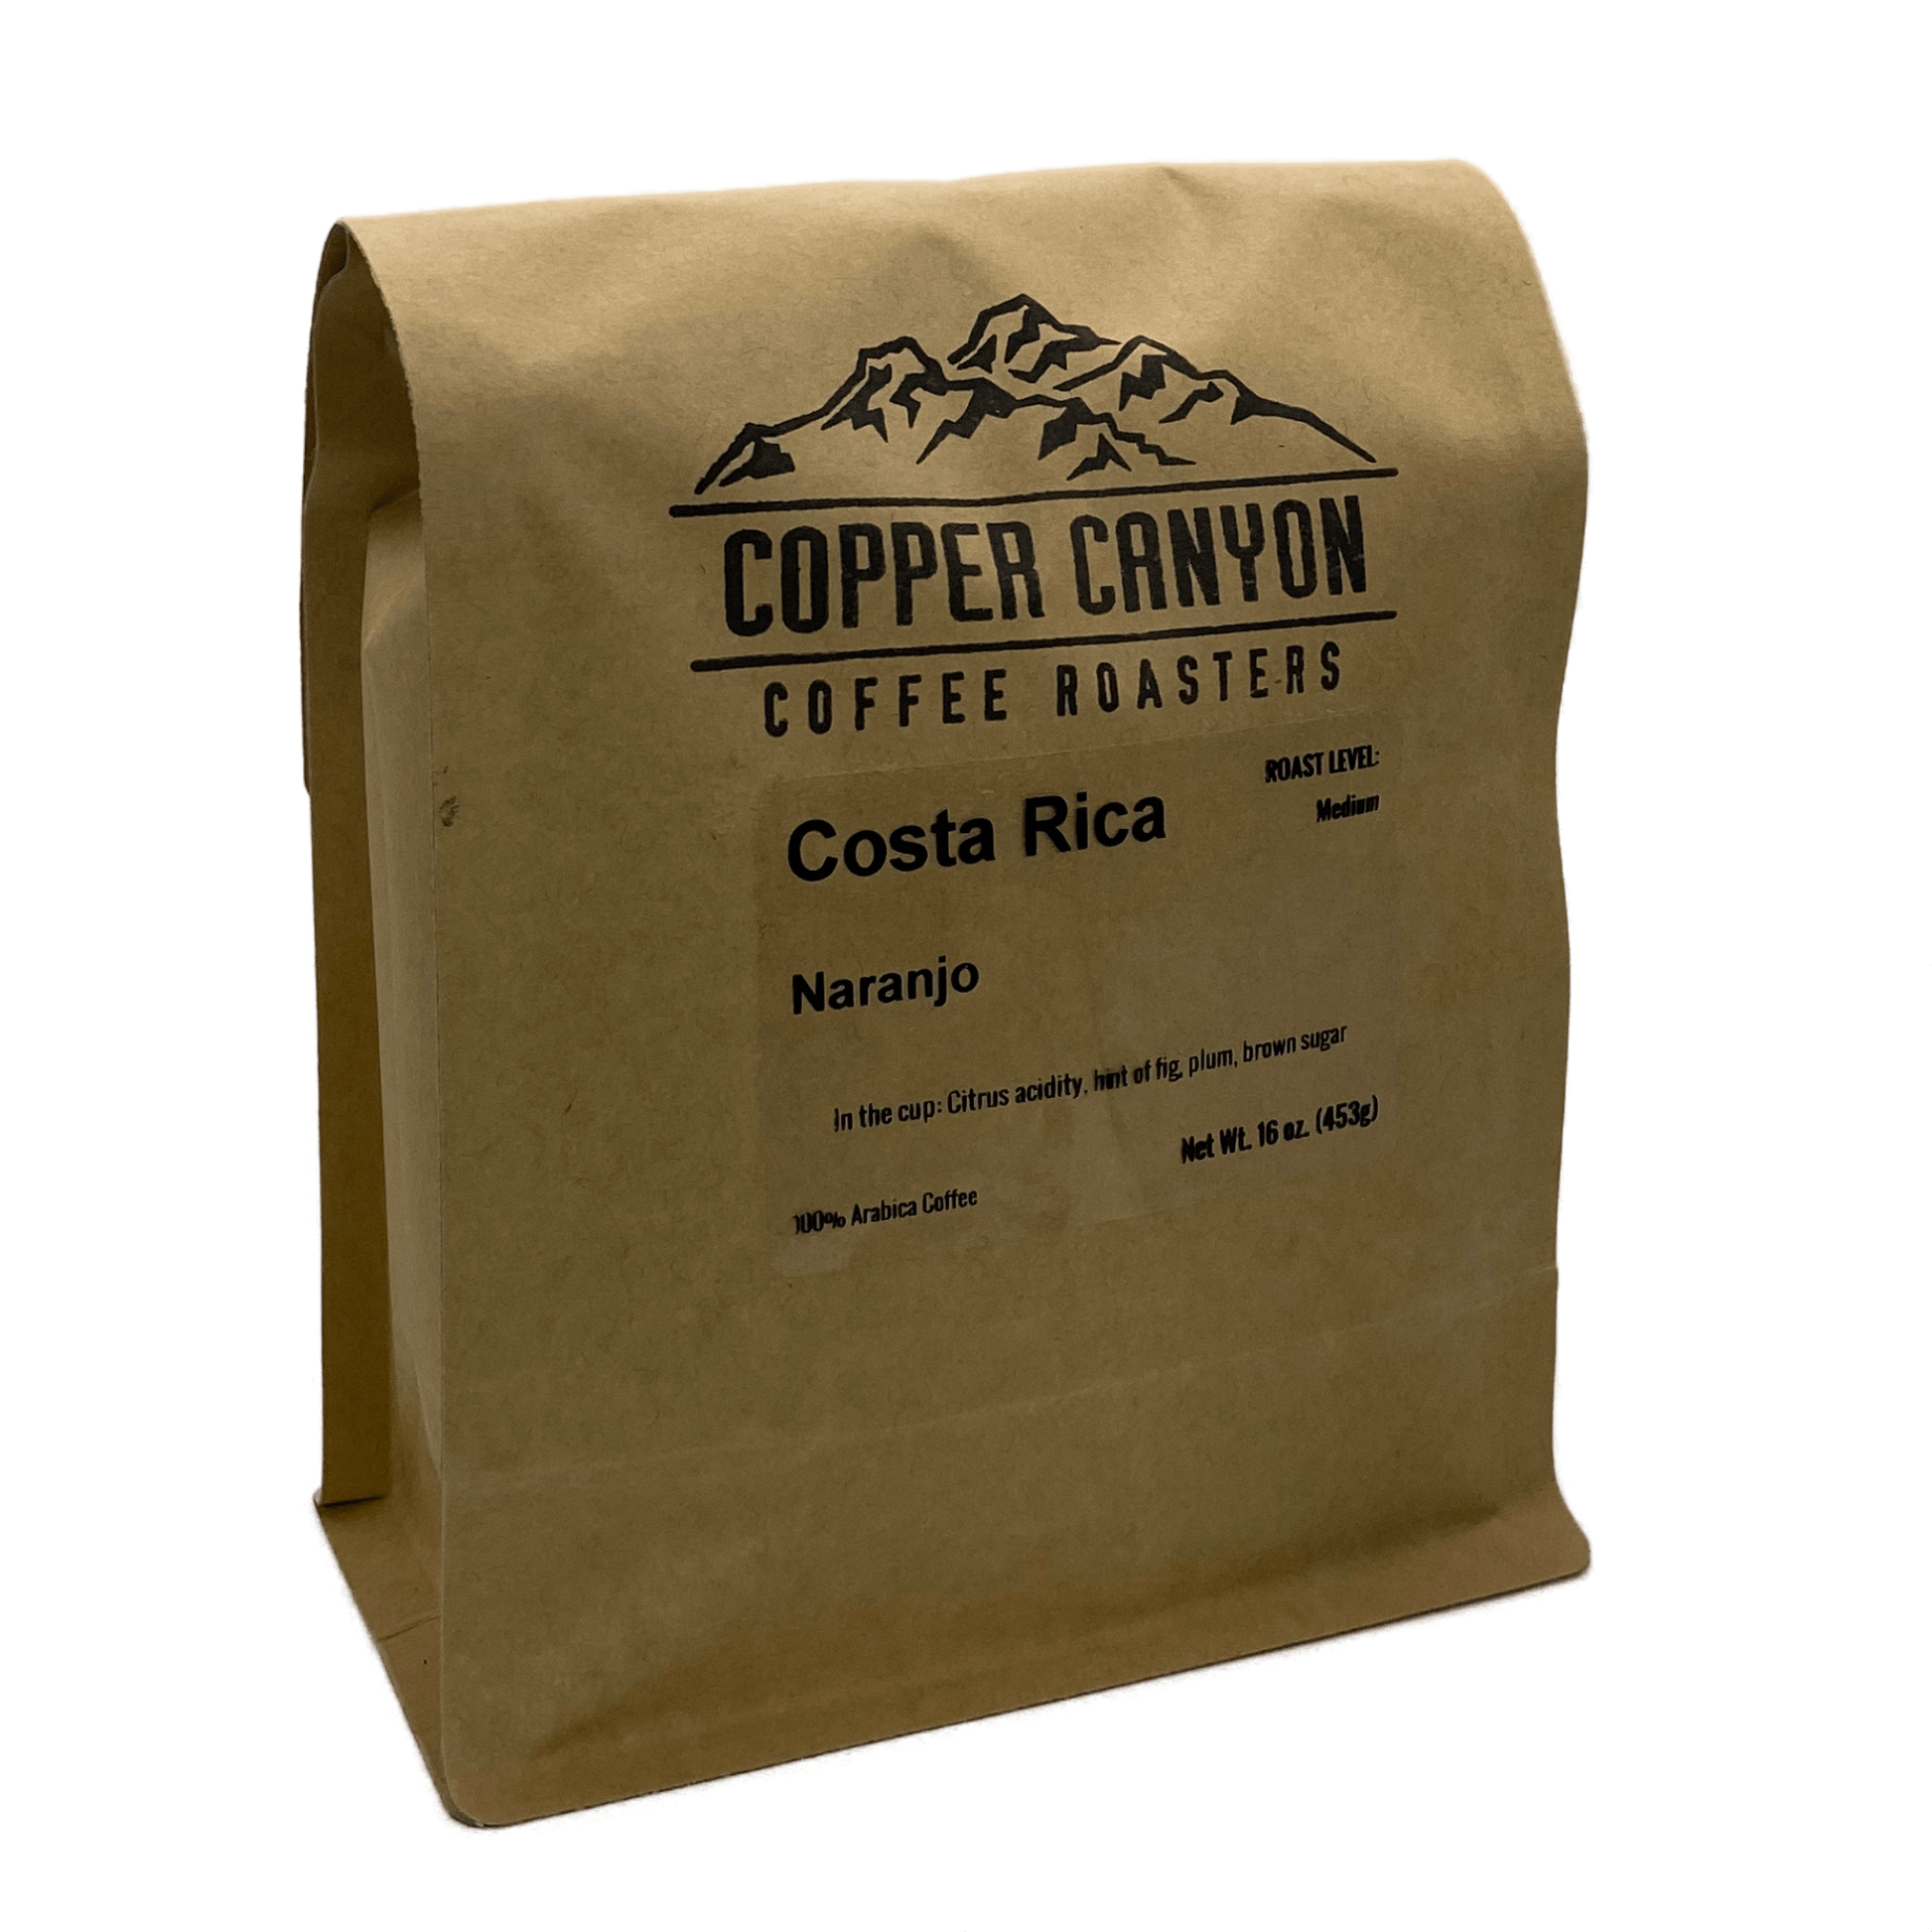 16 oz bag of Costa Rica, single origin, medium roast coffee